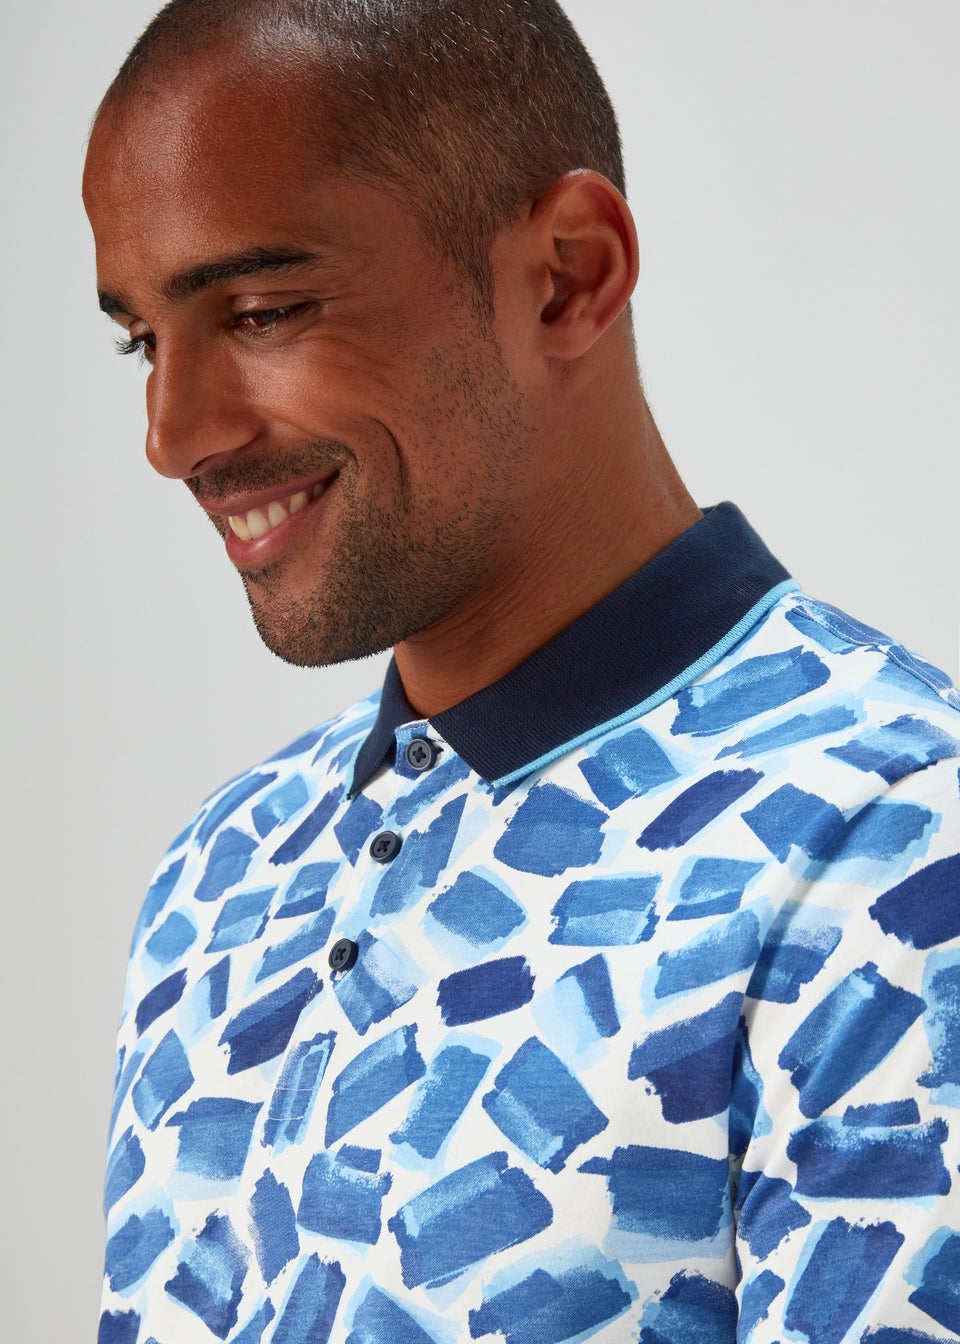 Blue Abstract Print Polo Shirt